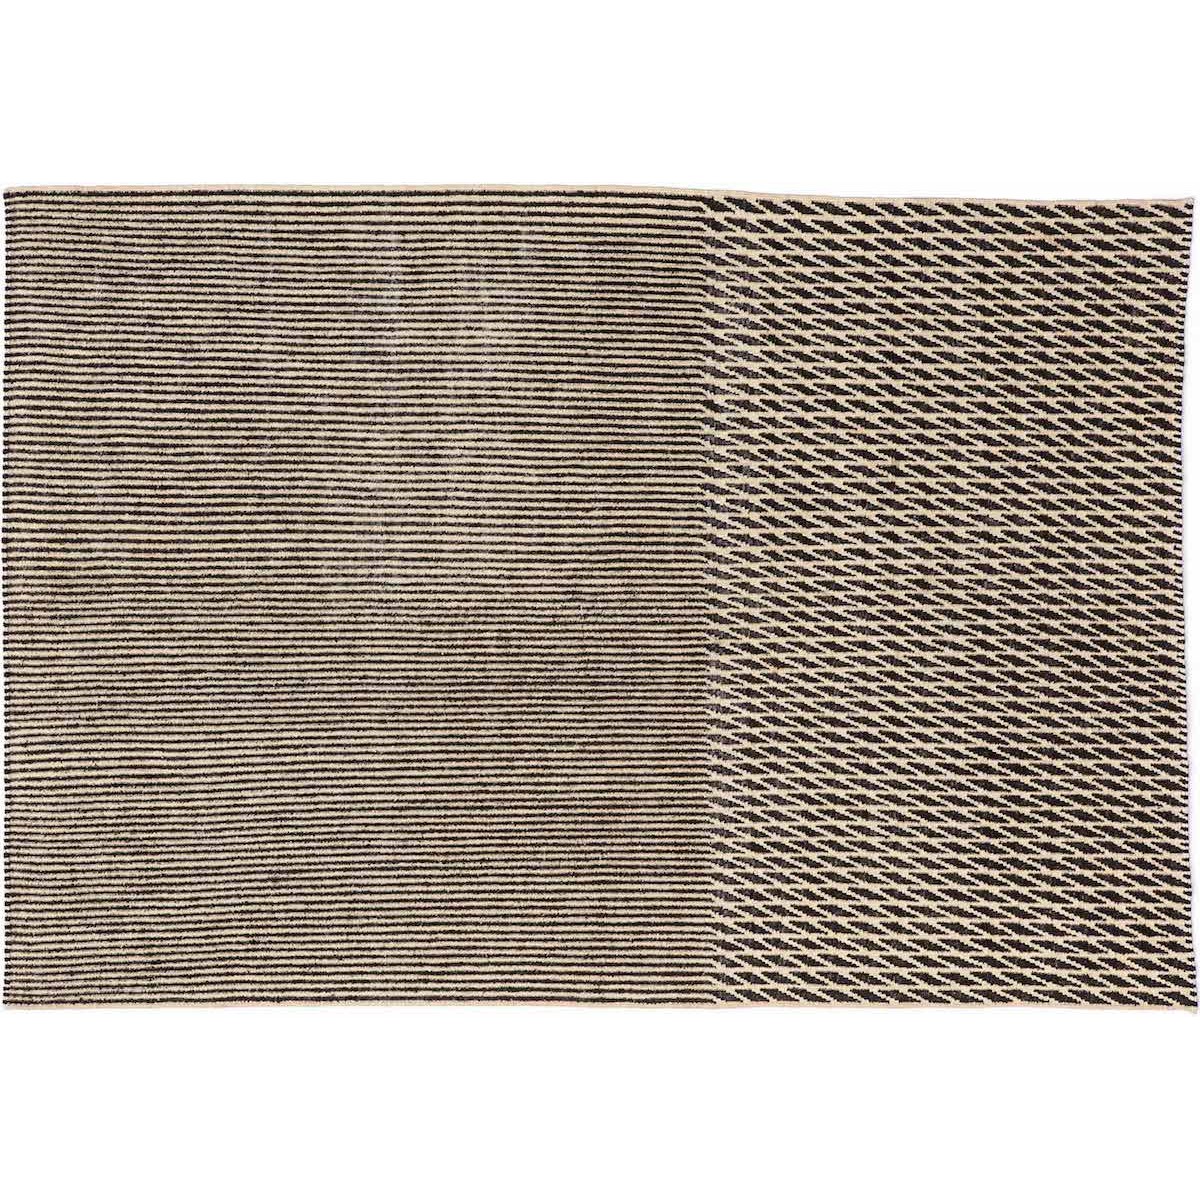 200x300cm - black - Blur rug